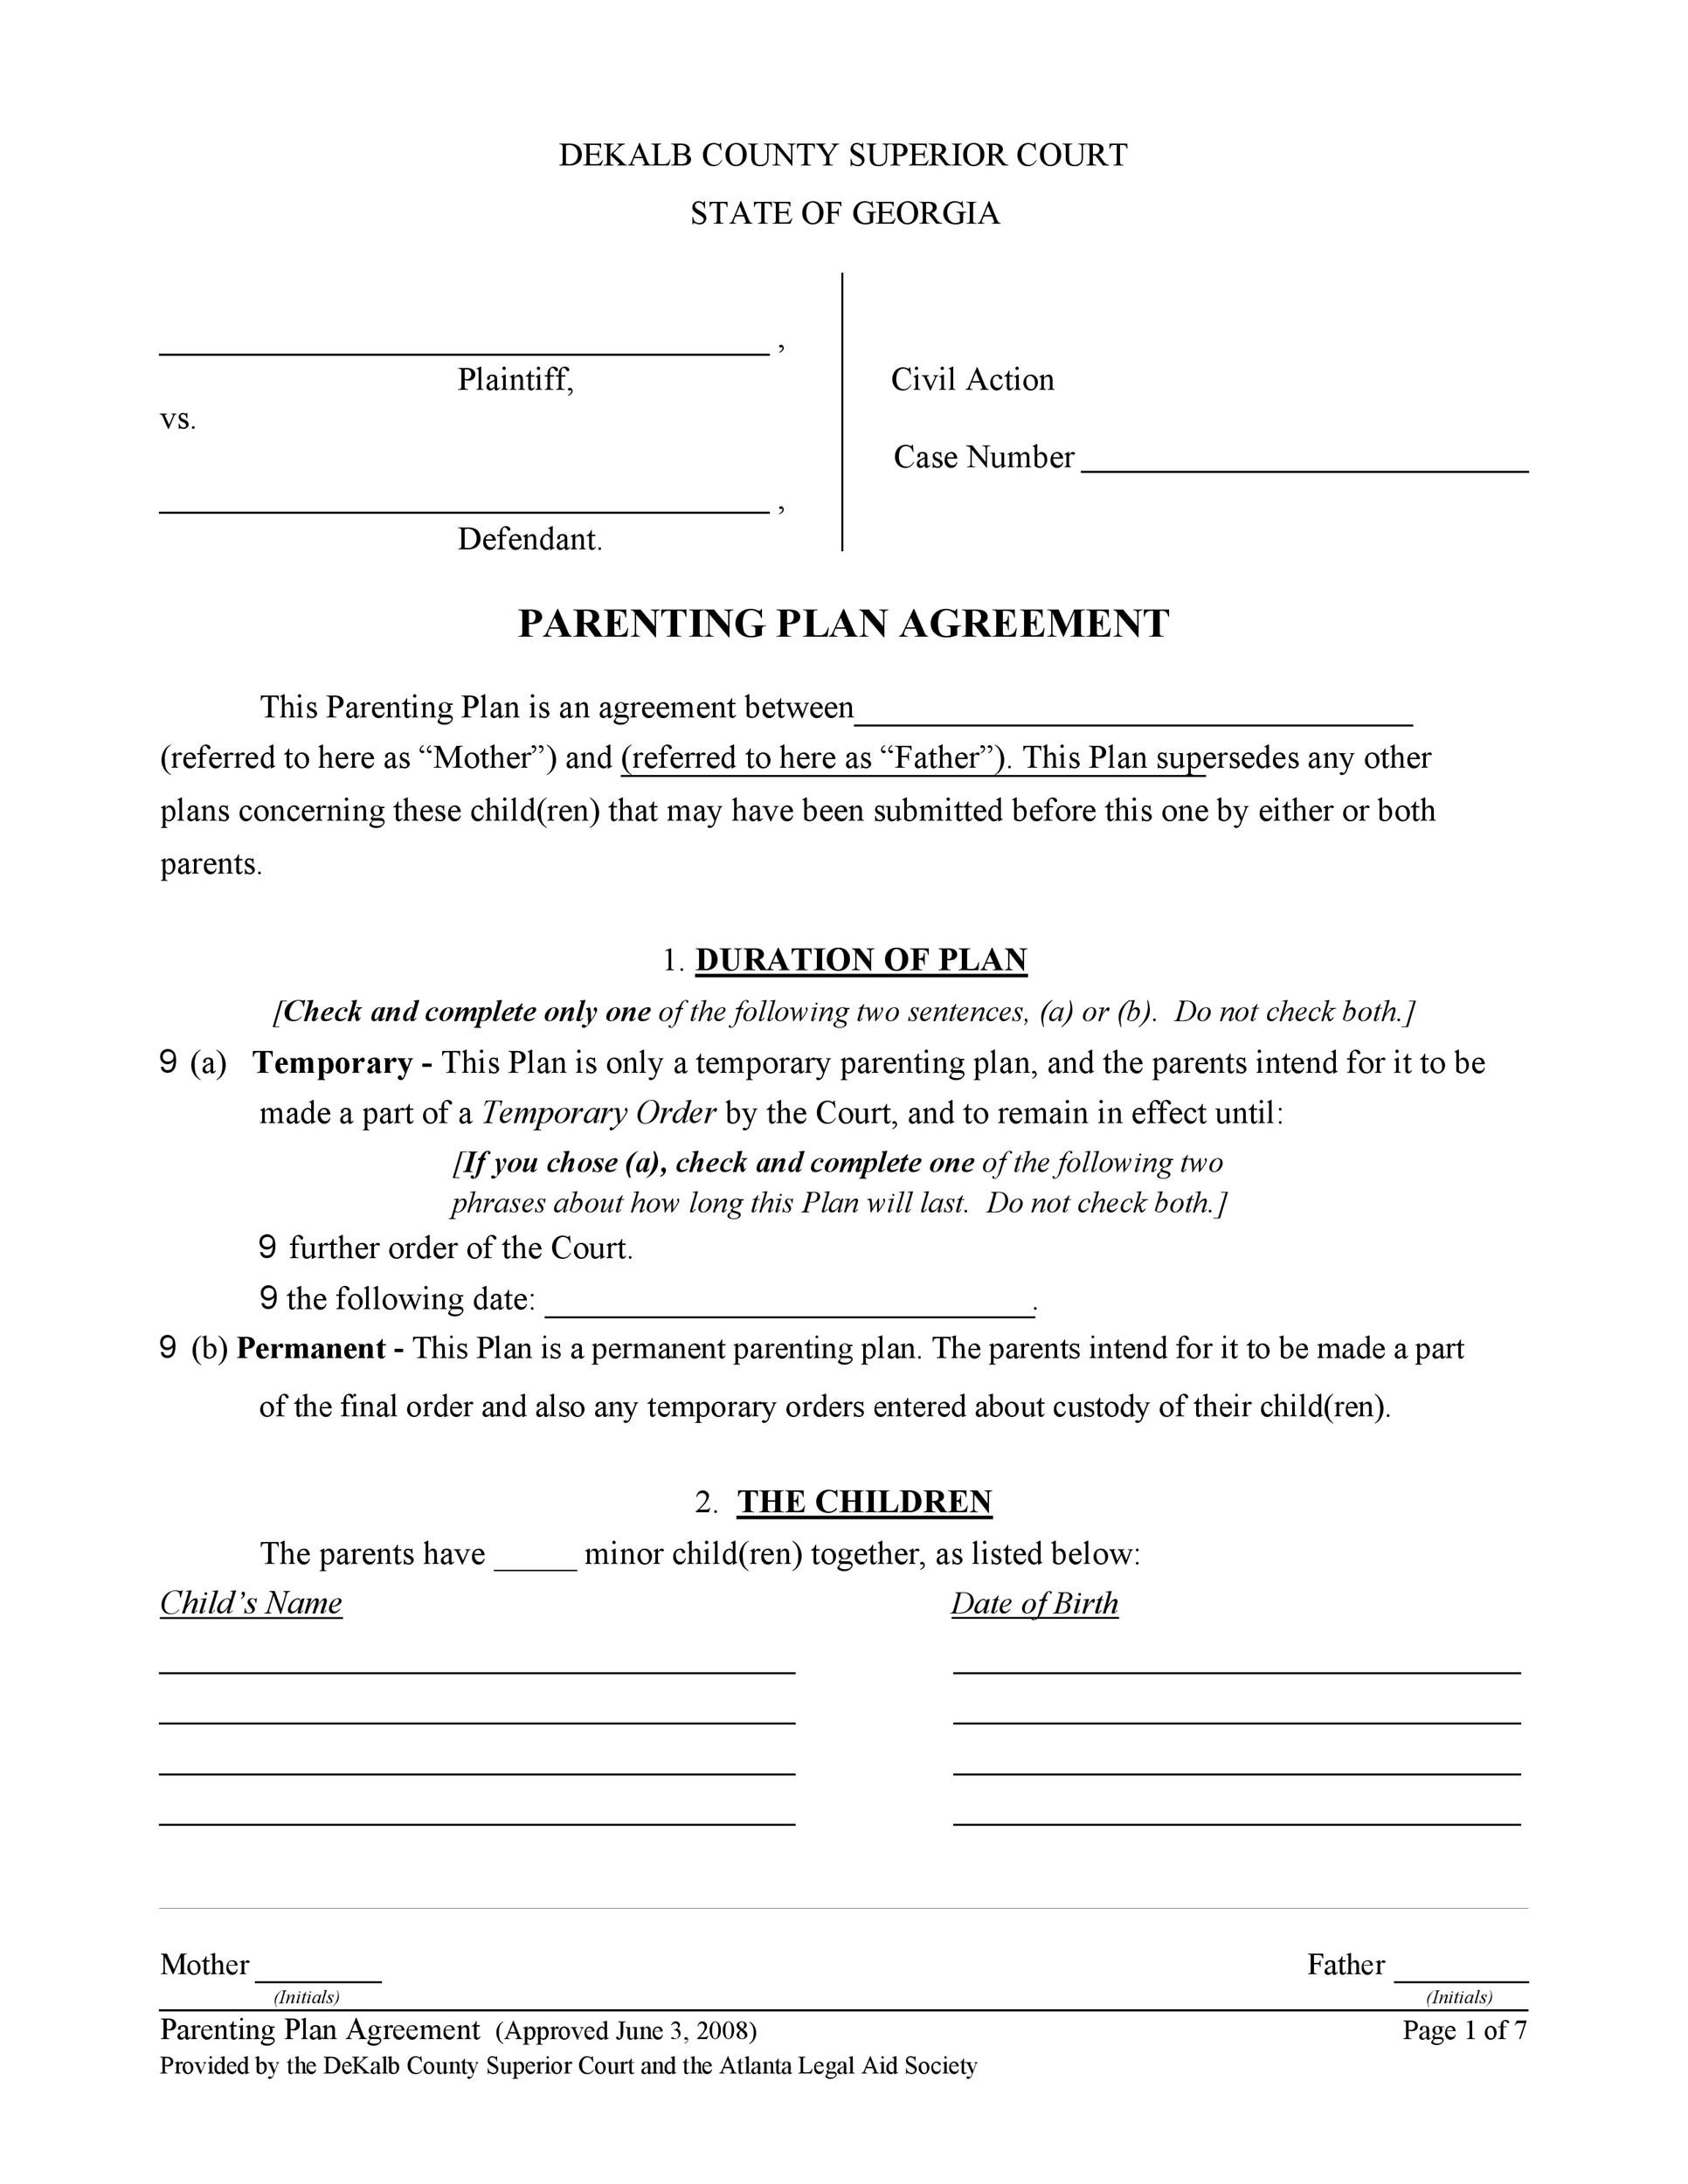 49 FREE Parenting Plan Custody Agreement Templates ᐅ TemplateLab